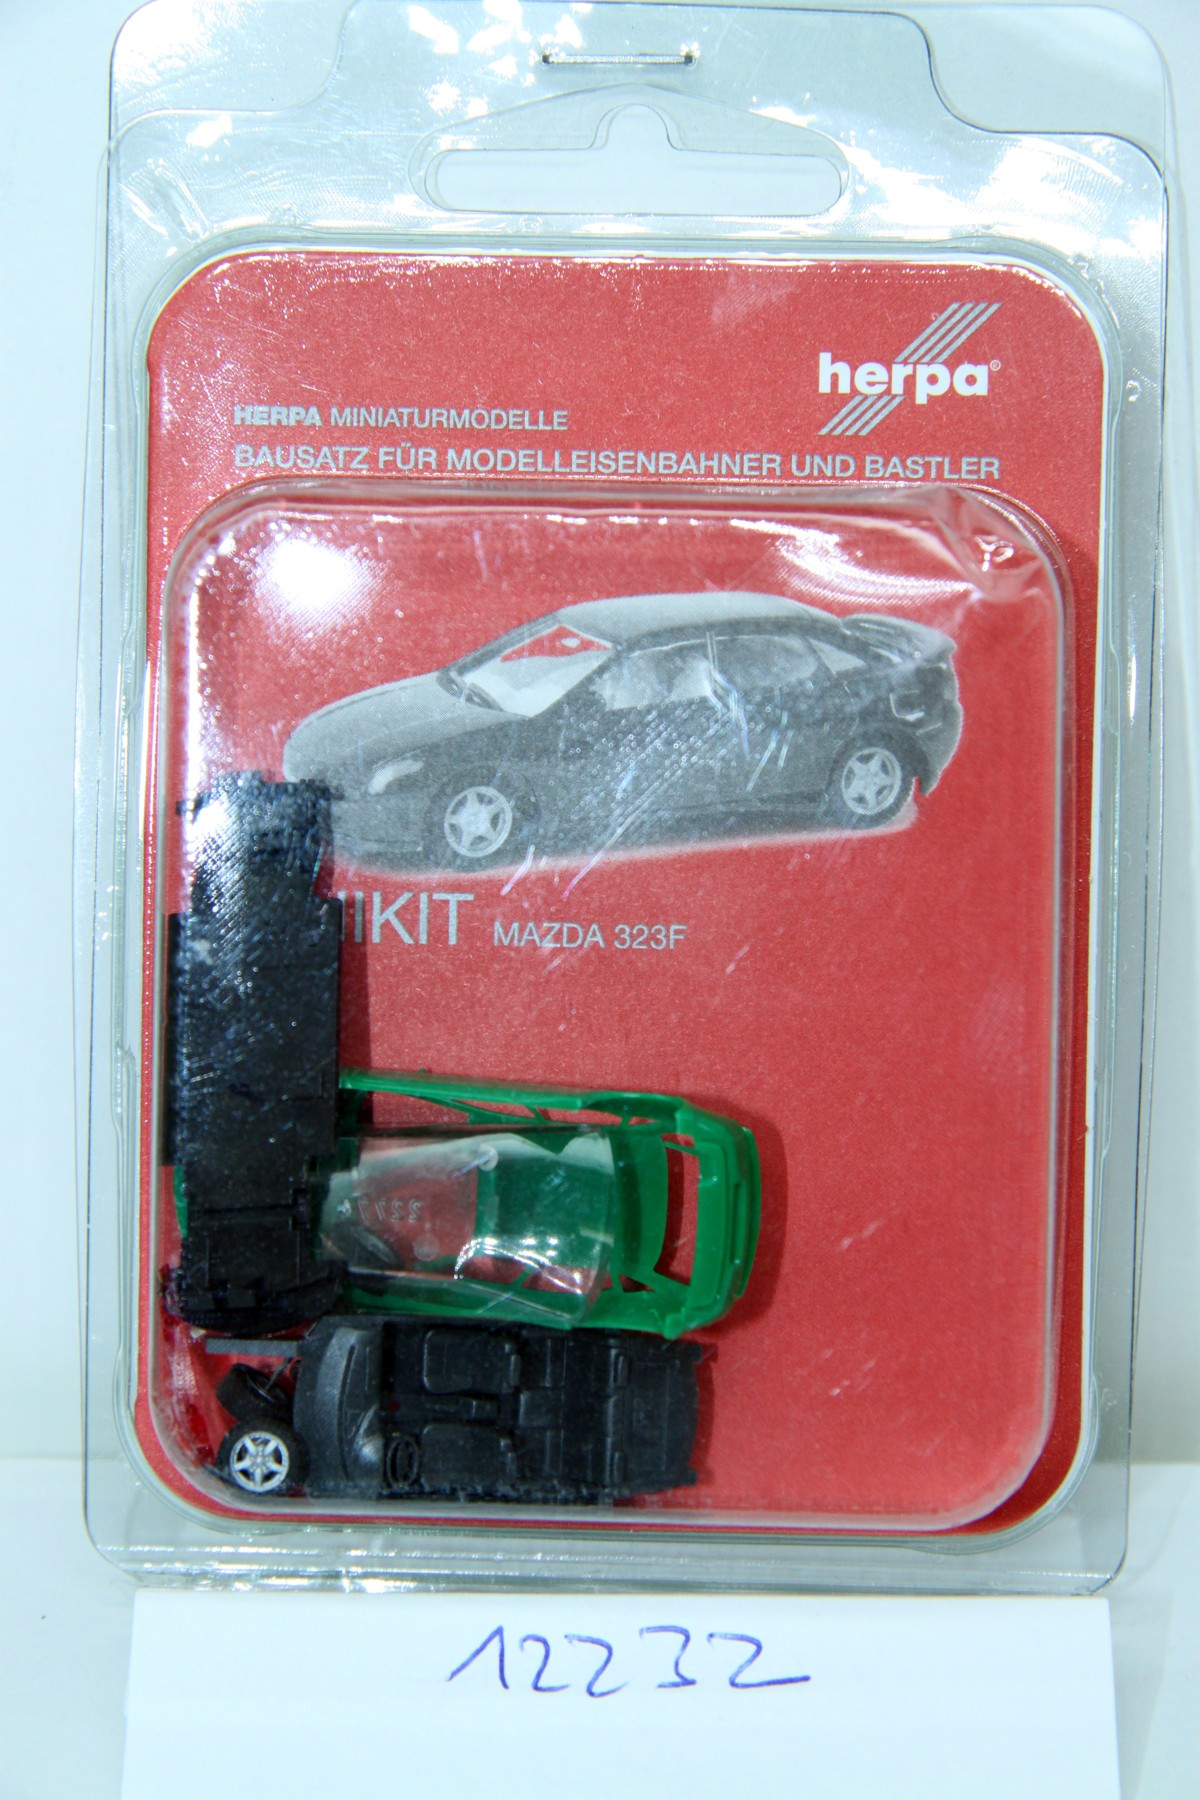 Herpa 012232, Minikit Mazda 323F, grün